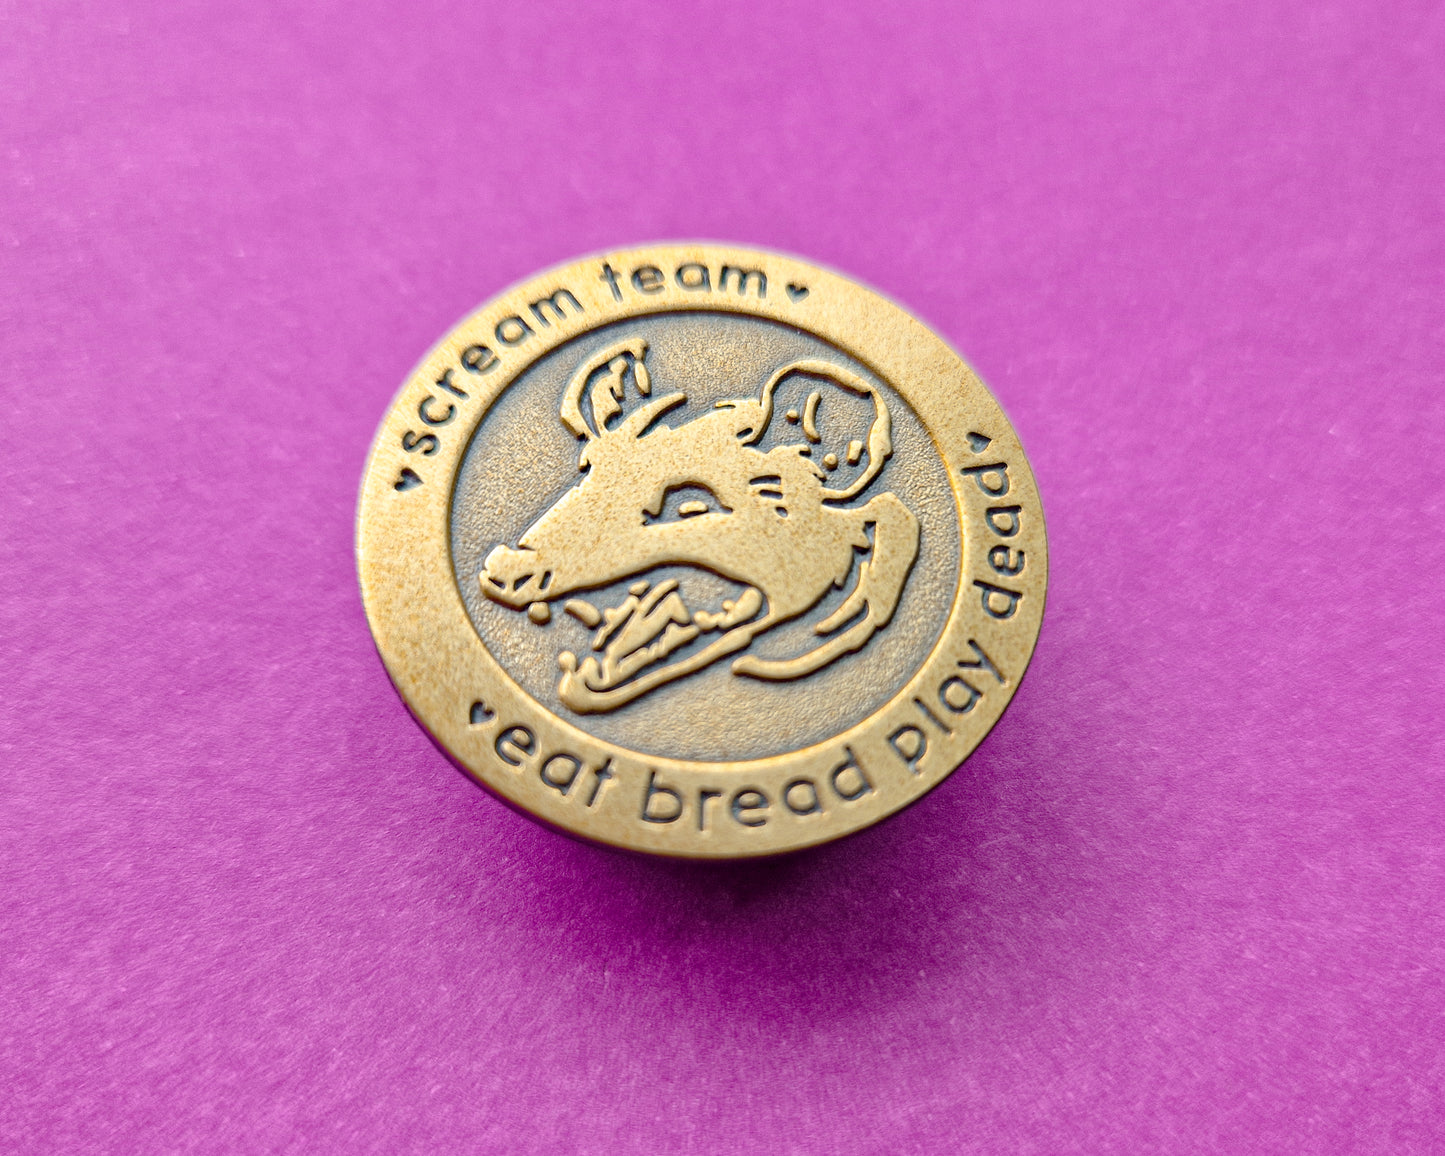 (Gold) Scream Team Opossum  - Enamel Pin - Trash Troupe